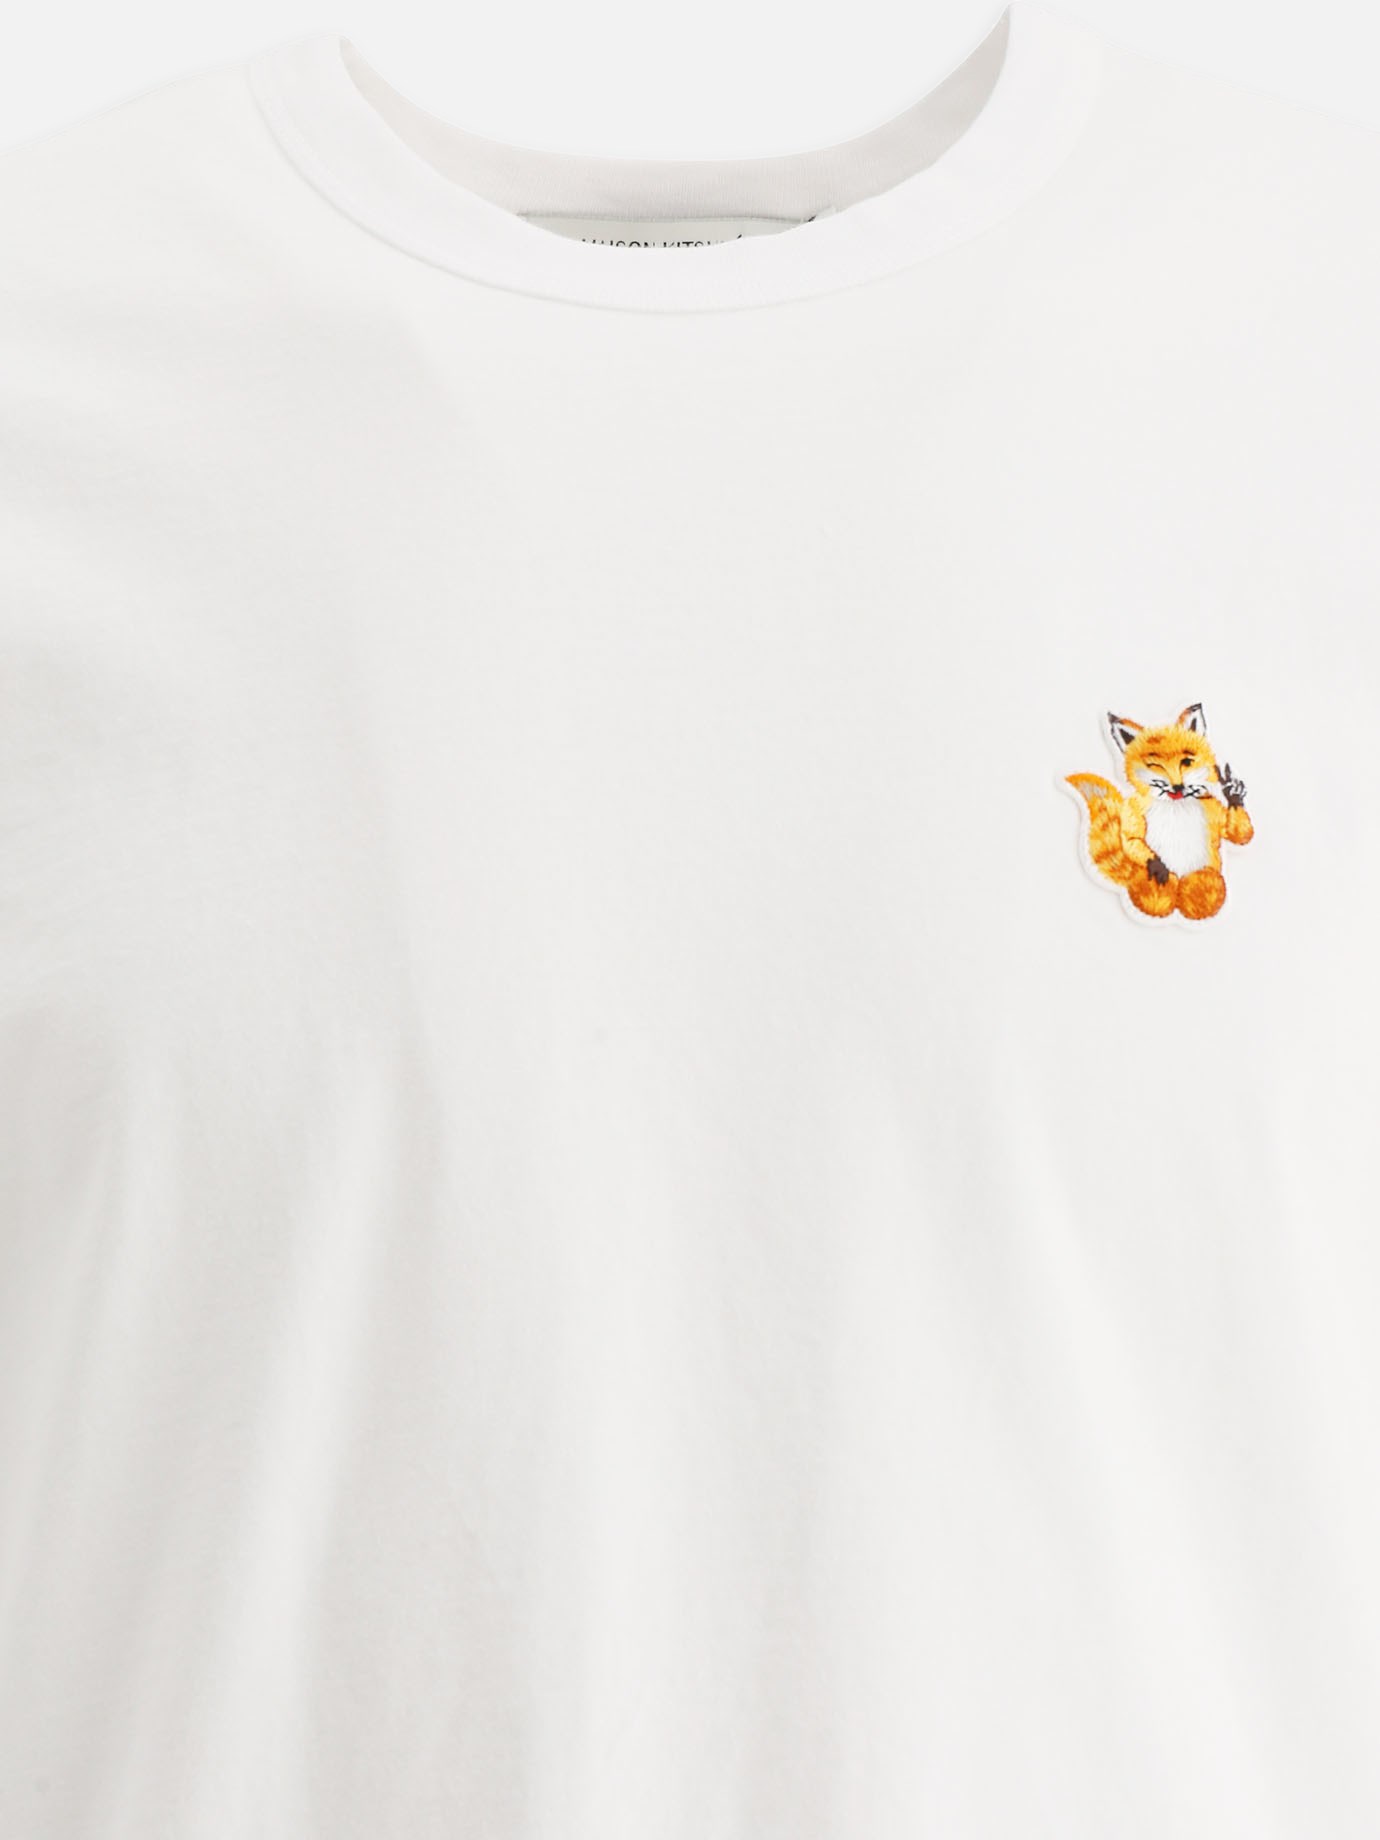  All Right Fox  t-shirt by Maison Kitsuné